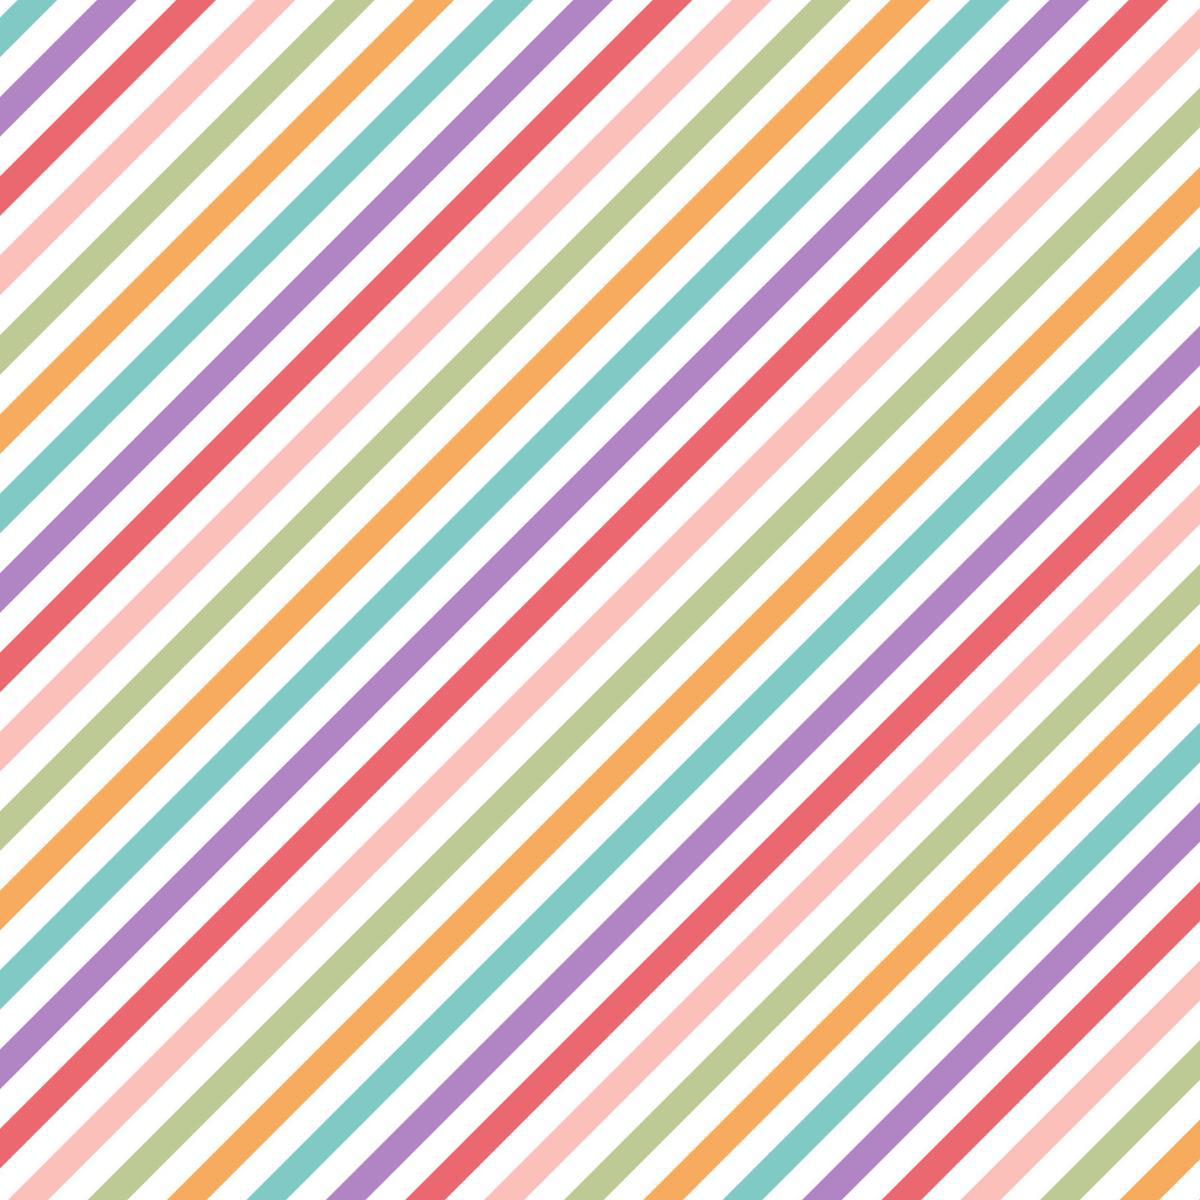 Simply Stripe - Dress